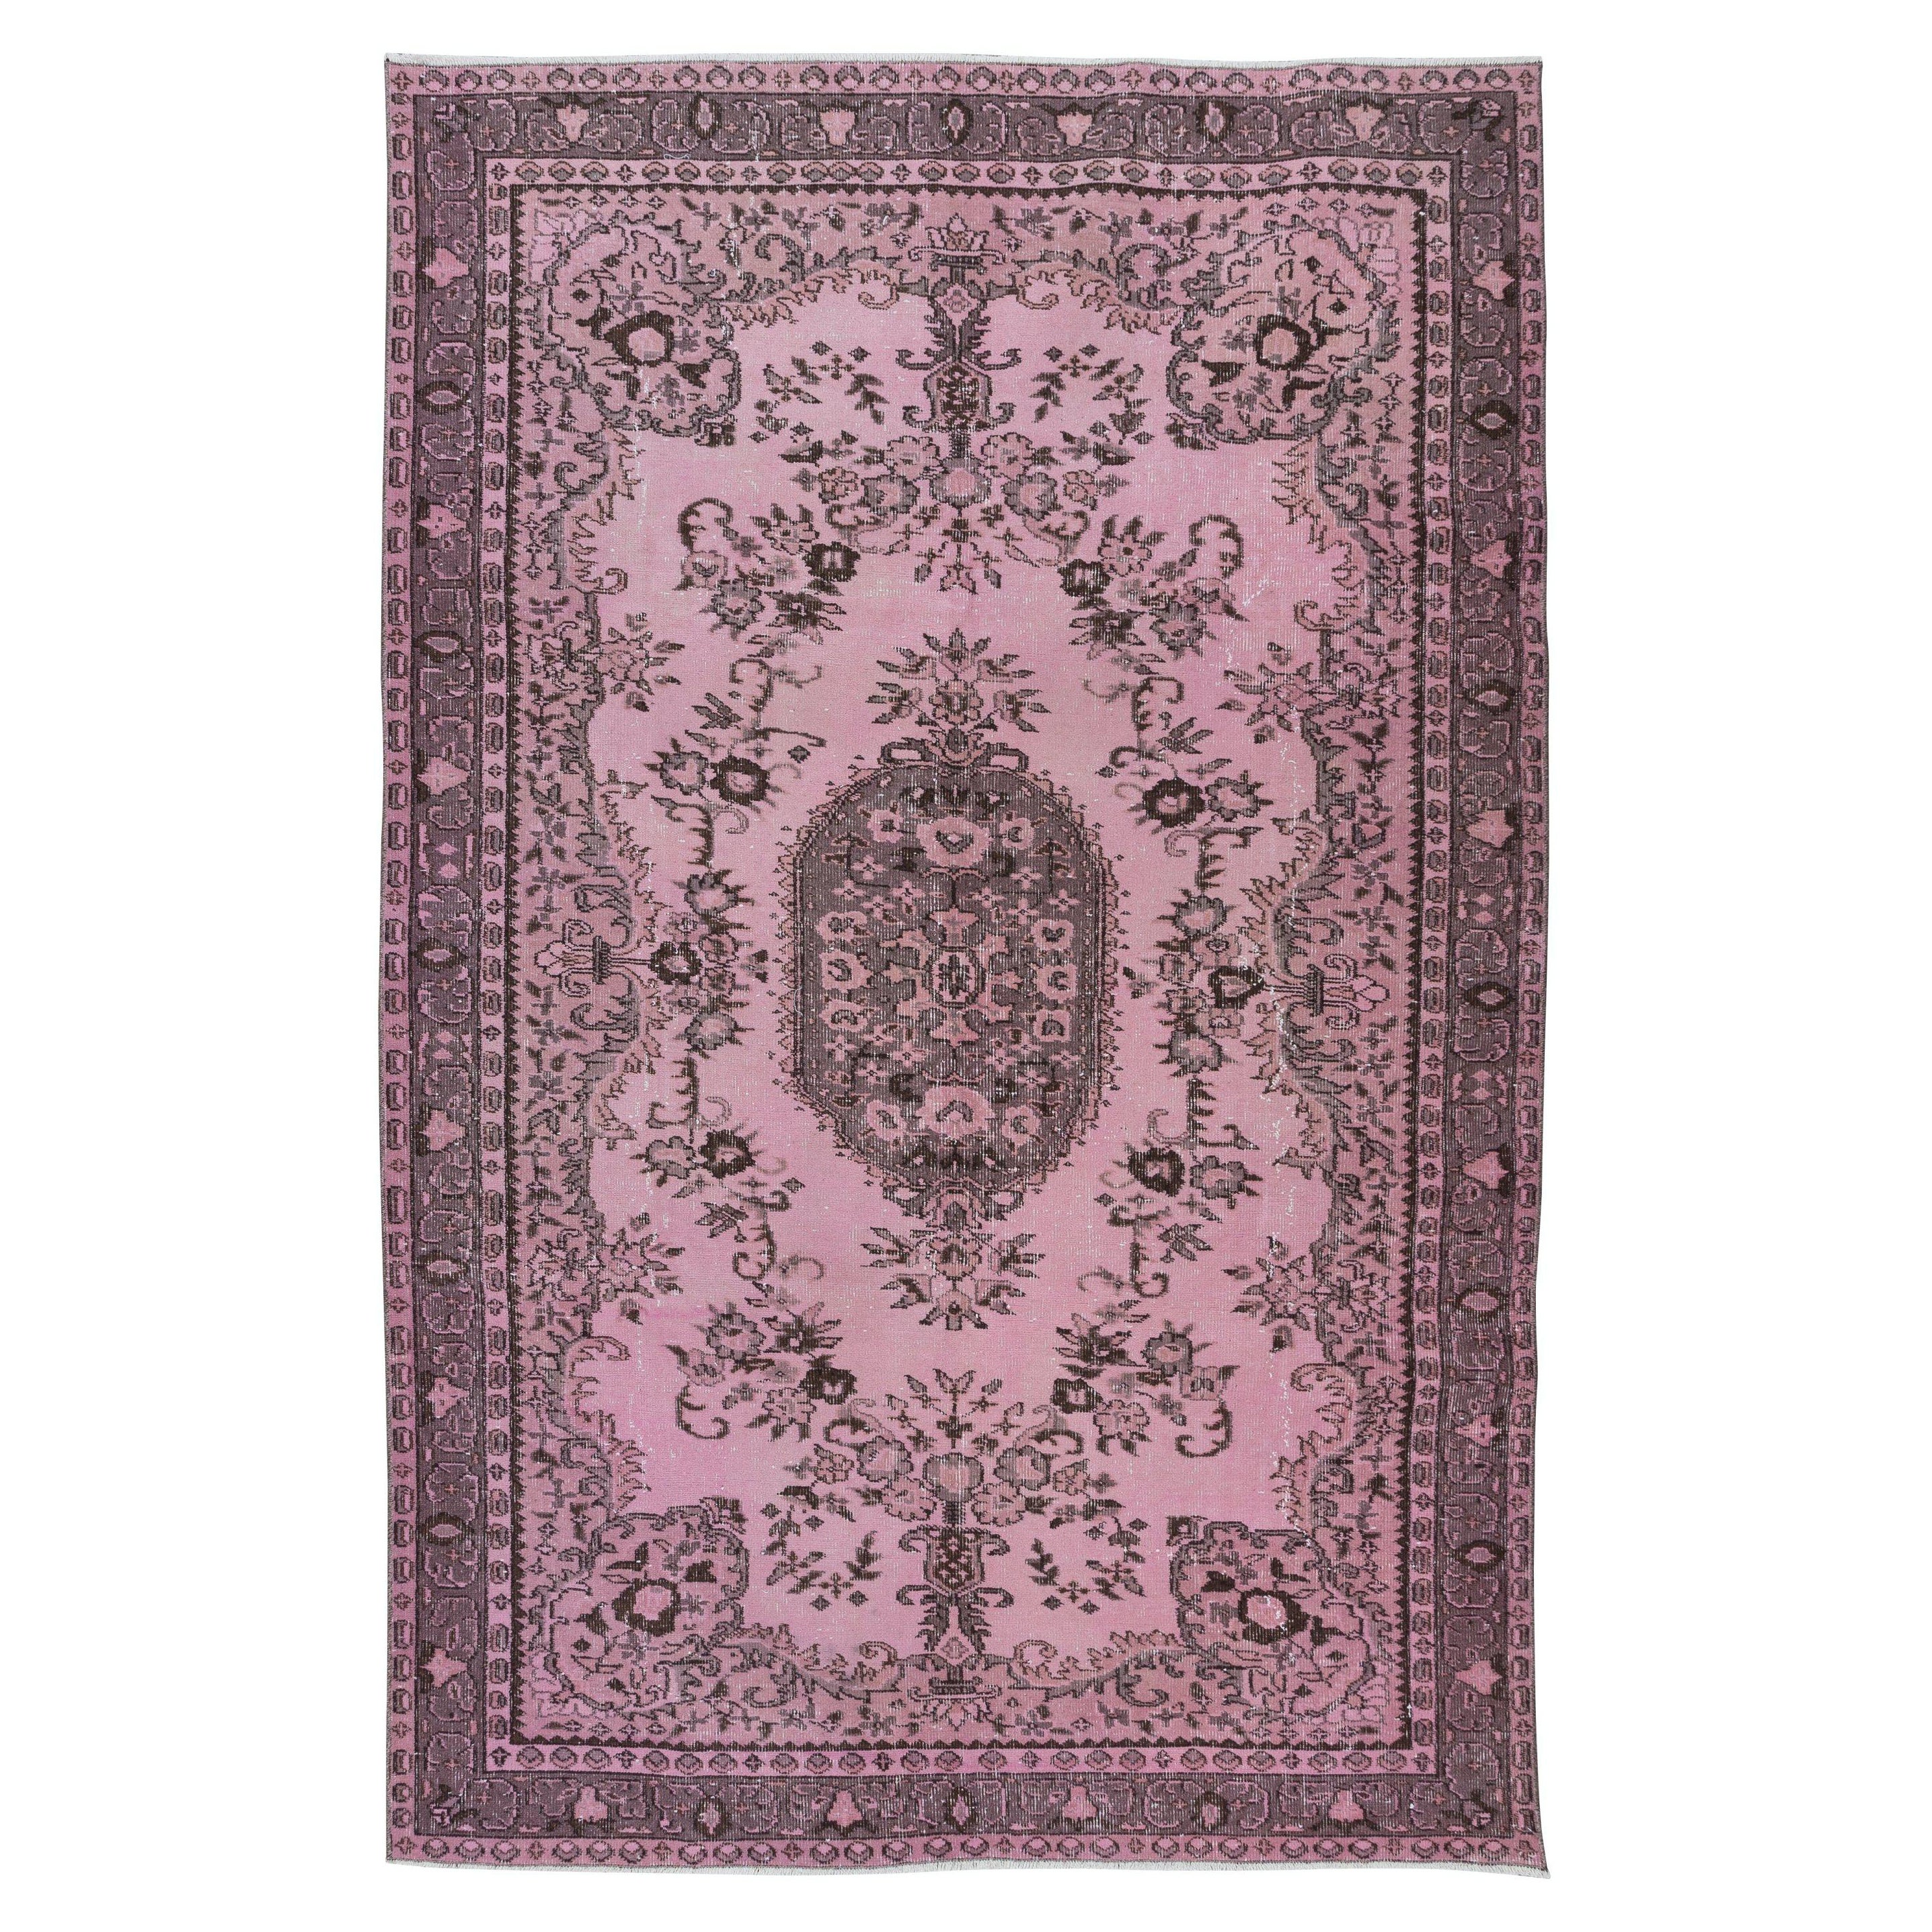 5.6x8.6 Ft Pink Area Rug for Modern Interior, Handmade Turkish Decorative Carpet